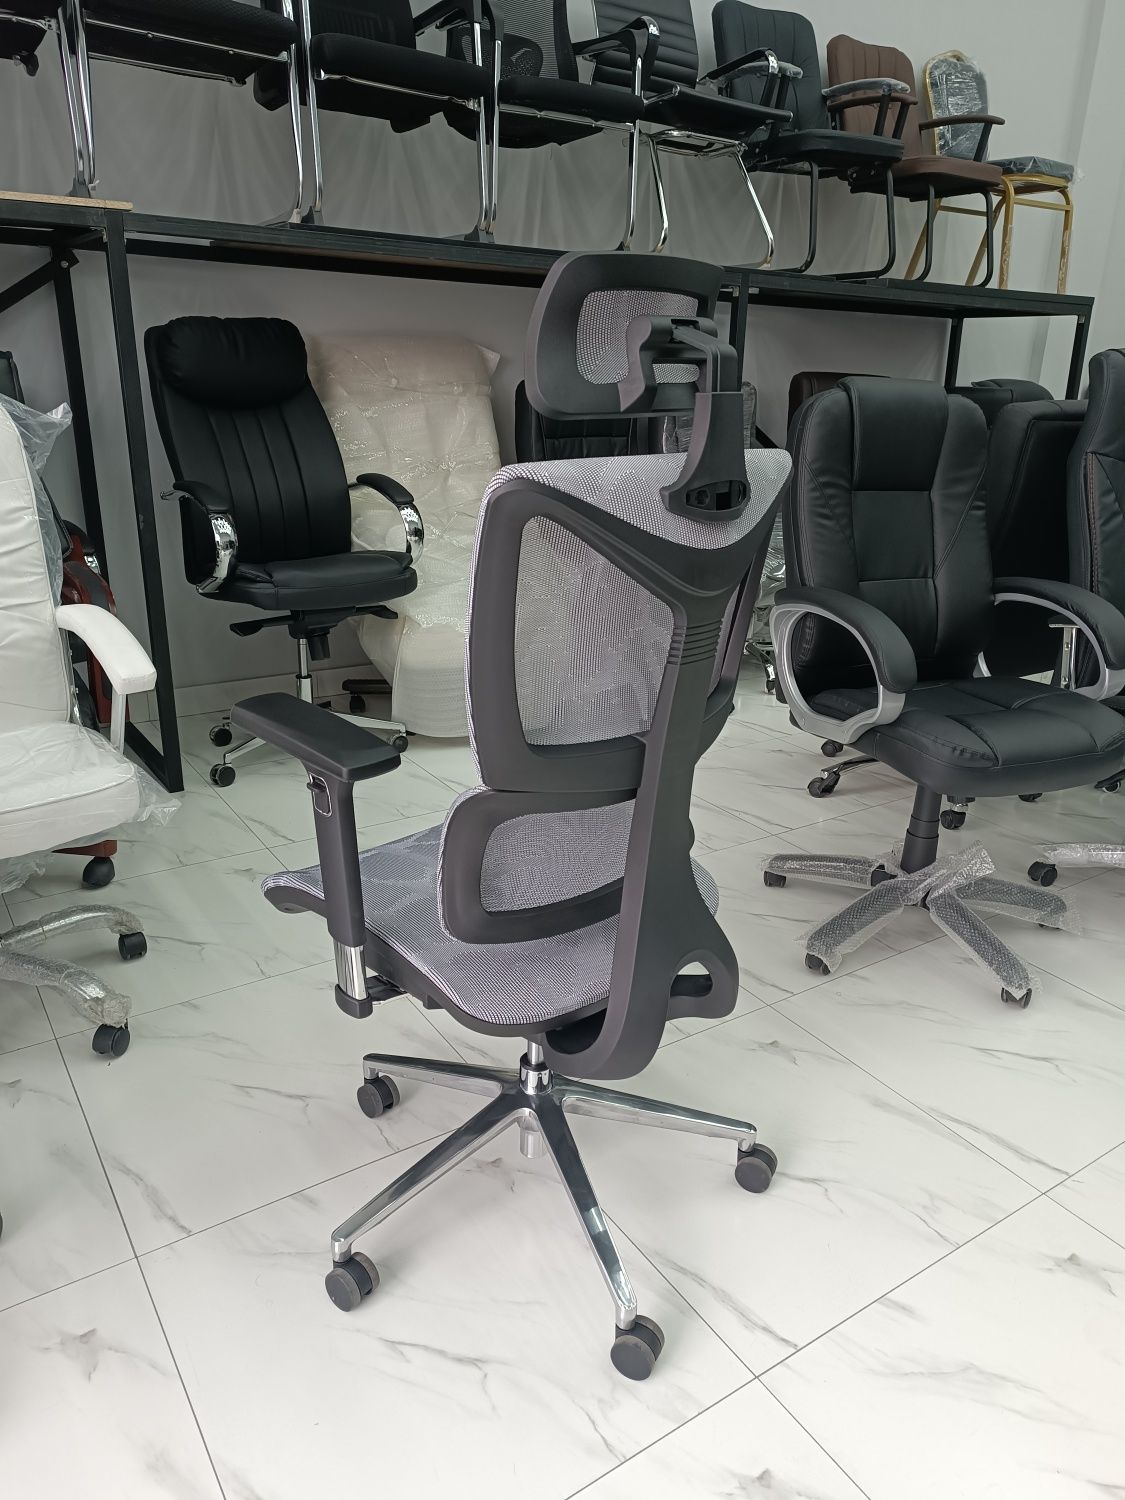 Кресло для офиса , yangi uslubdagi Kreslolar

кресла для руководите